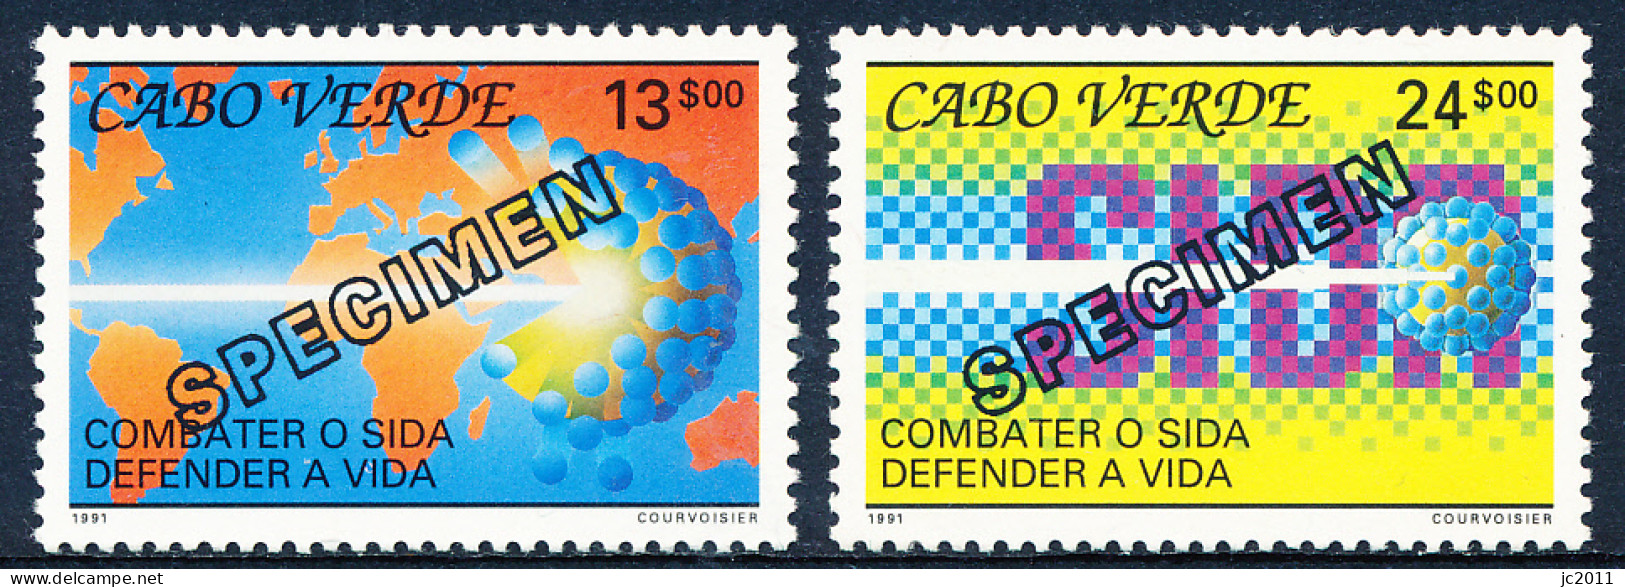 Cabo Verde - 1991 - AIDS - Specimen - MNG - Cape Verde